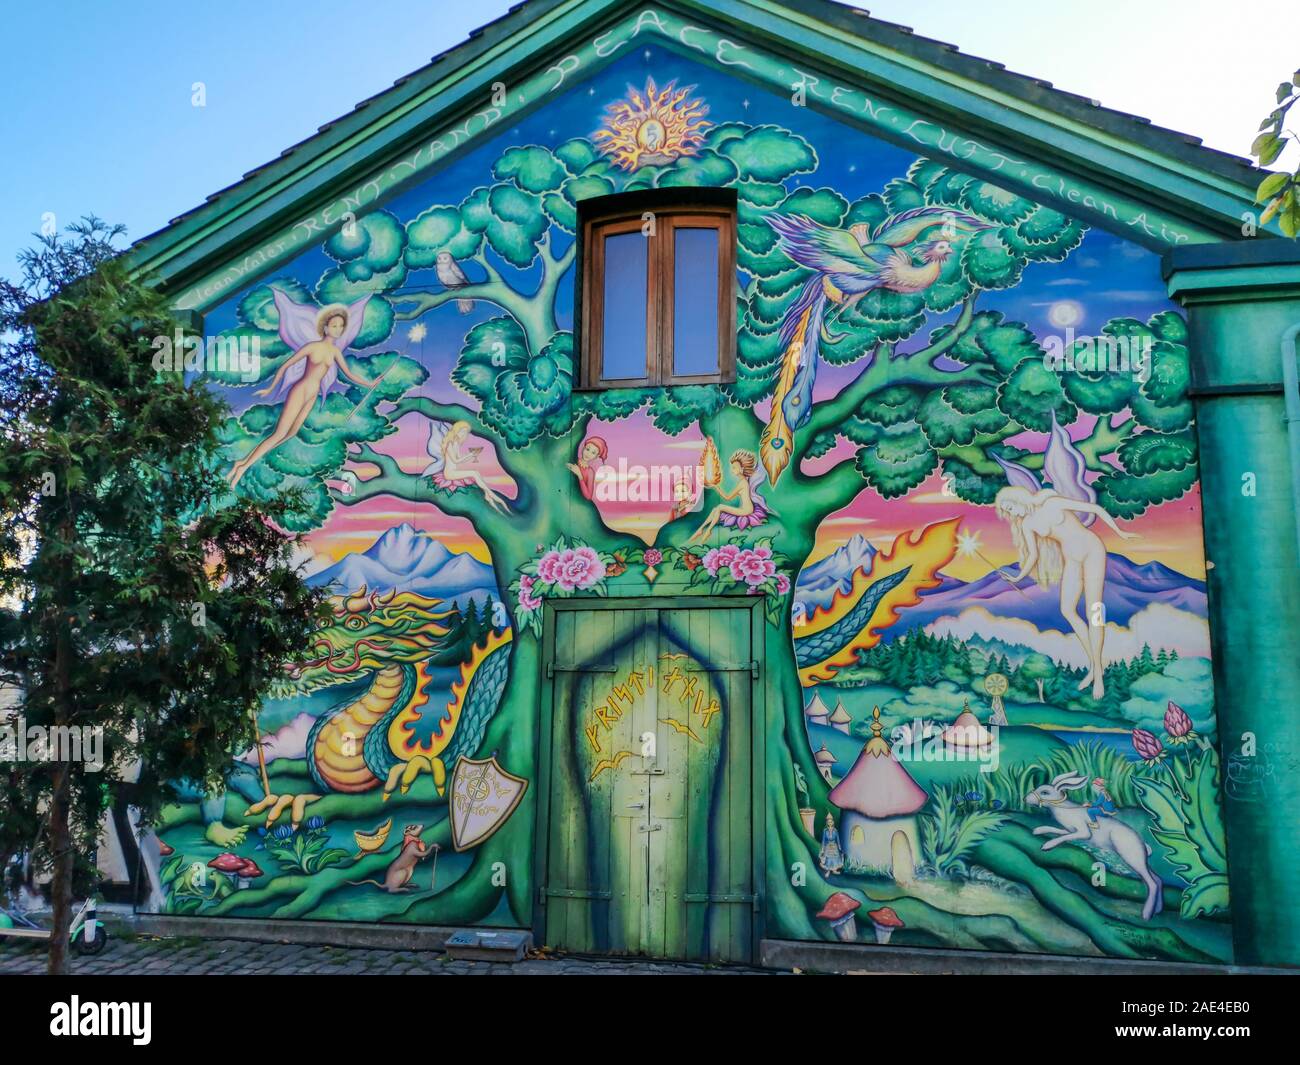 Christiania wall street art in Copenhagen Stock Photo